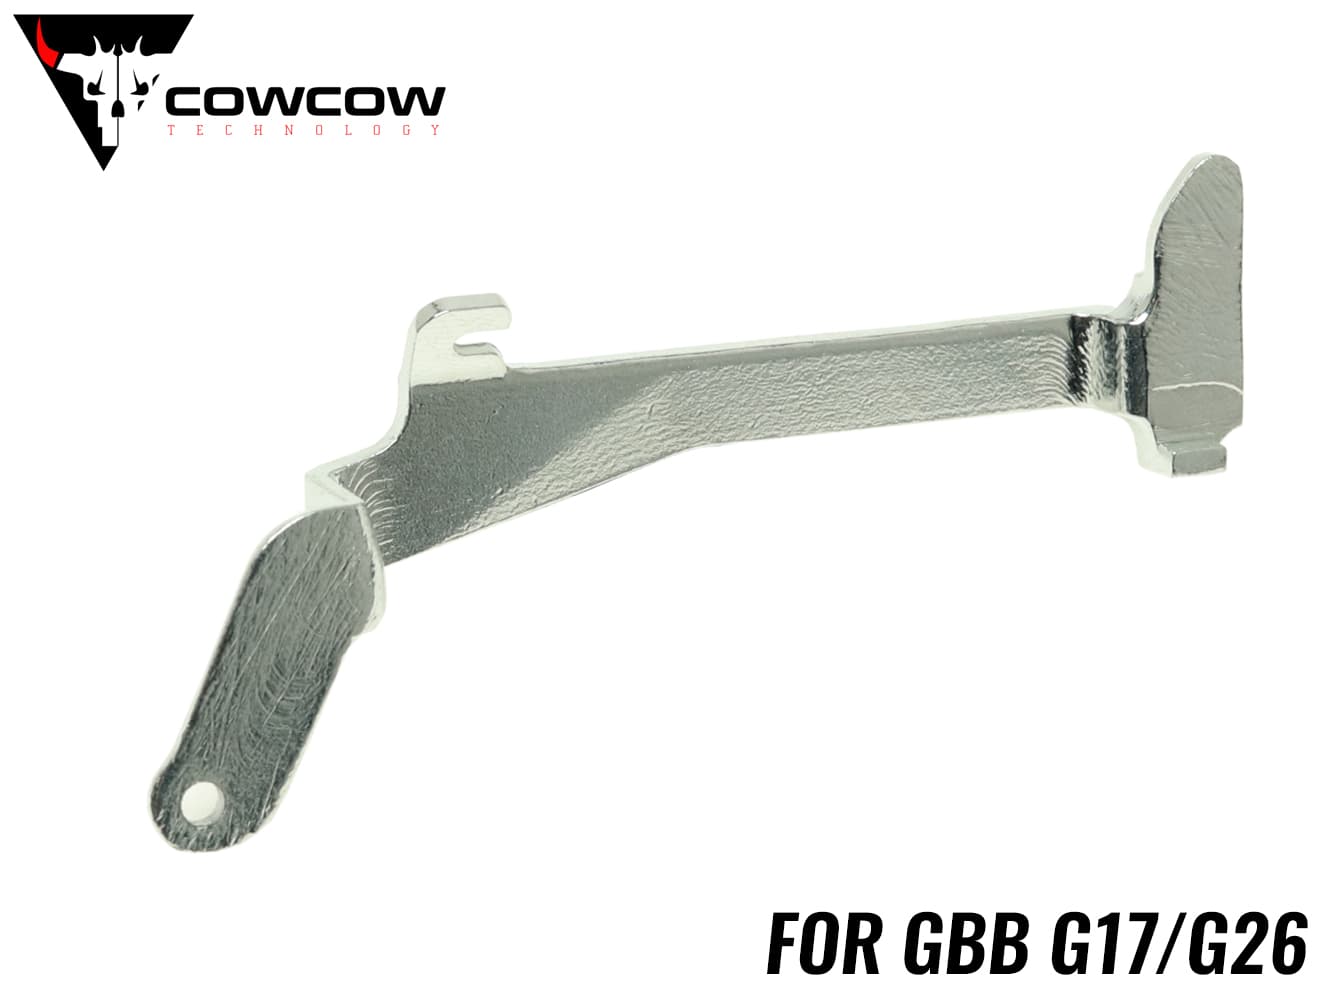 COWCOW TECHNOLOGY ハイカーボンスチール CNCトリガーバー G17/G26◆マルイ GBB G17/G26用 高炭素鋼 超高強度 トリガーフィール改善に